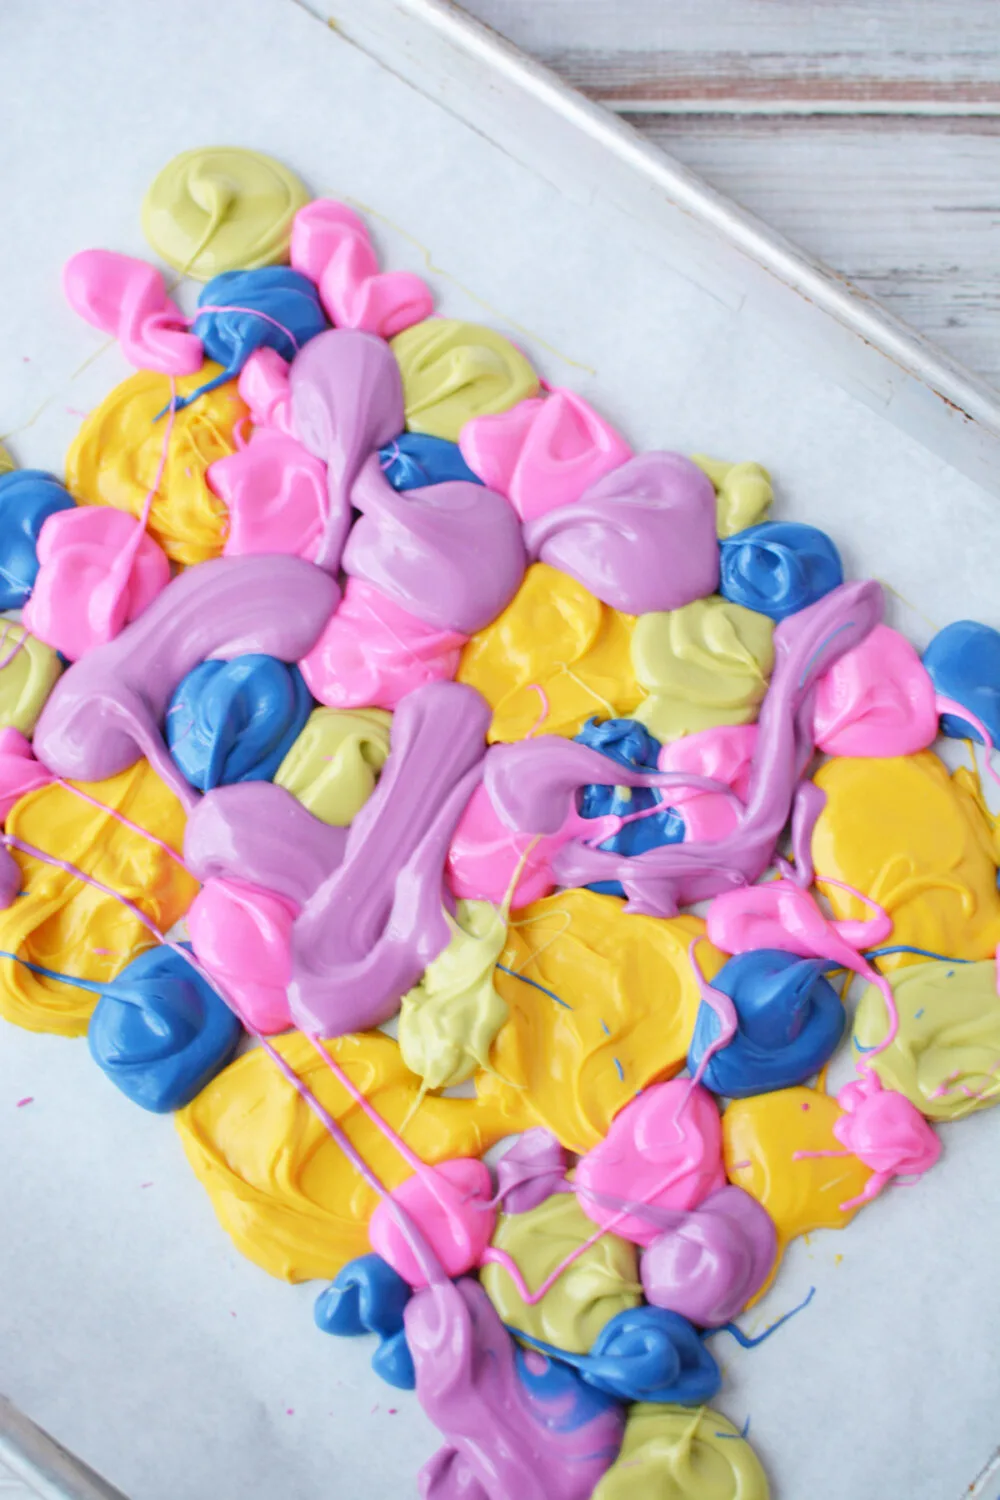 Blobs of candy melts on a baking sheet. 